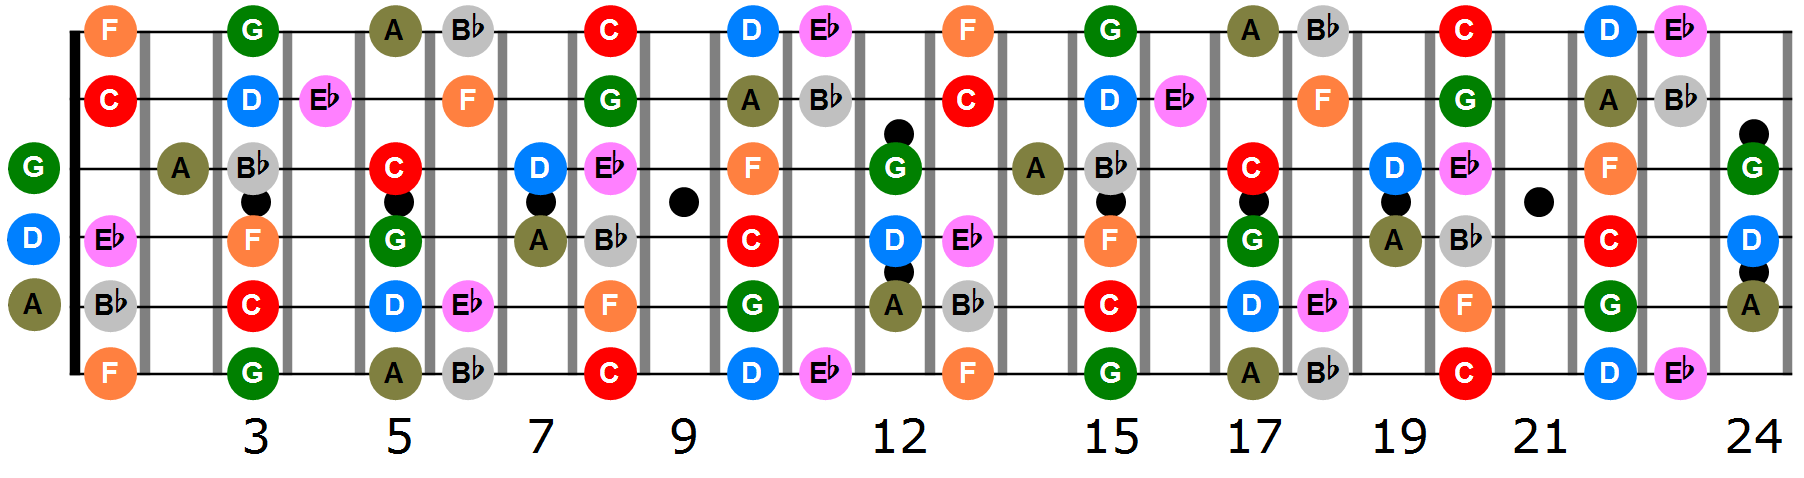 jazz chord symbols chart b flat chord piano left hand